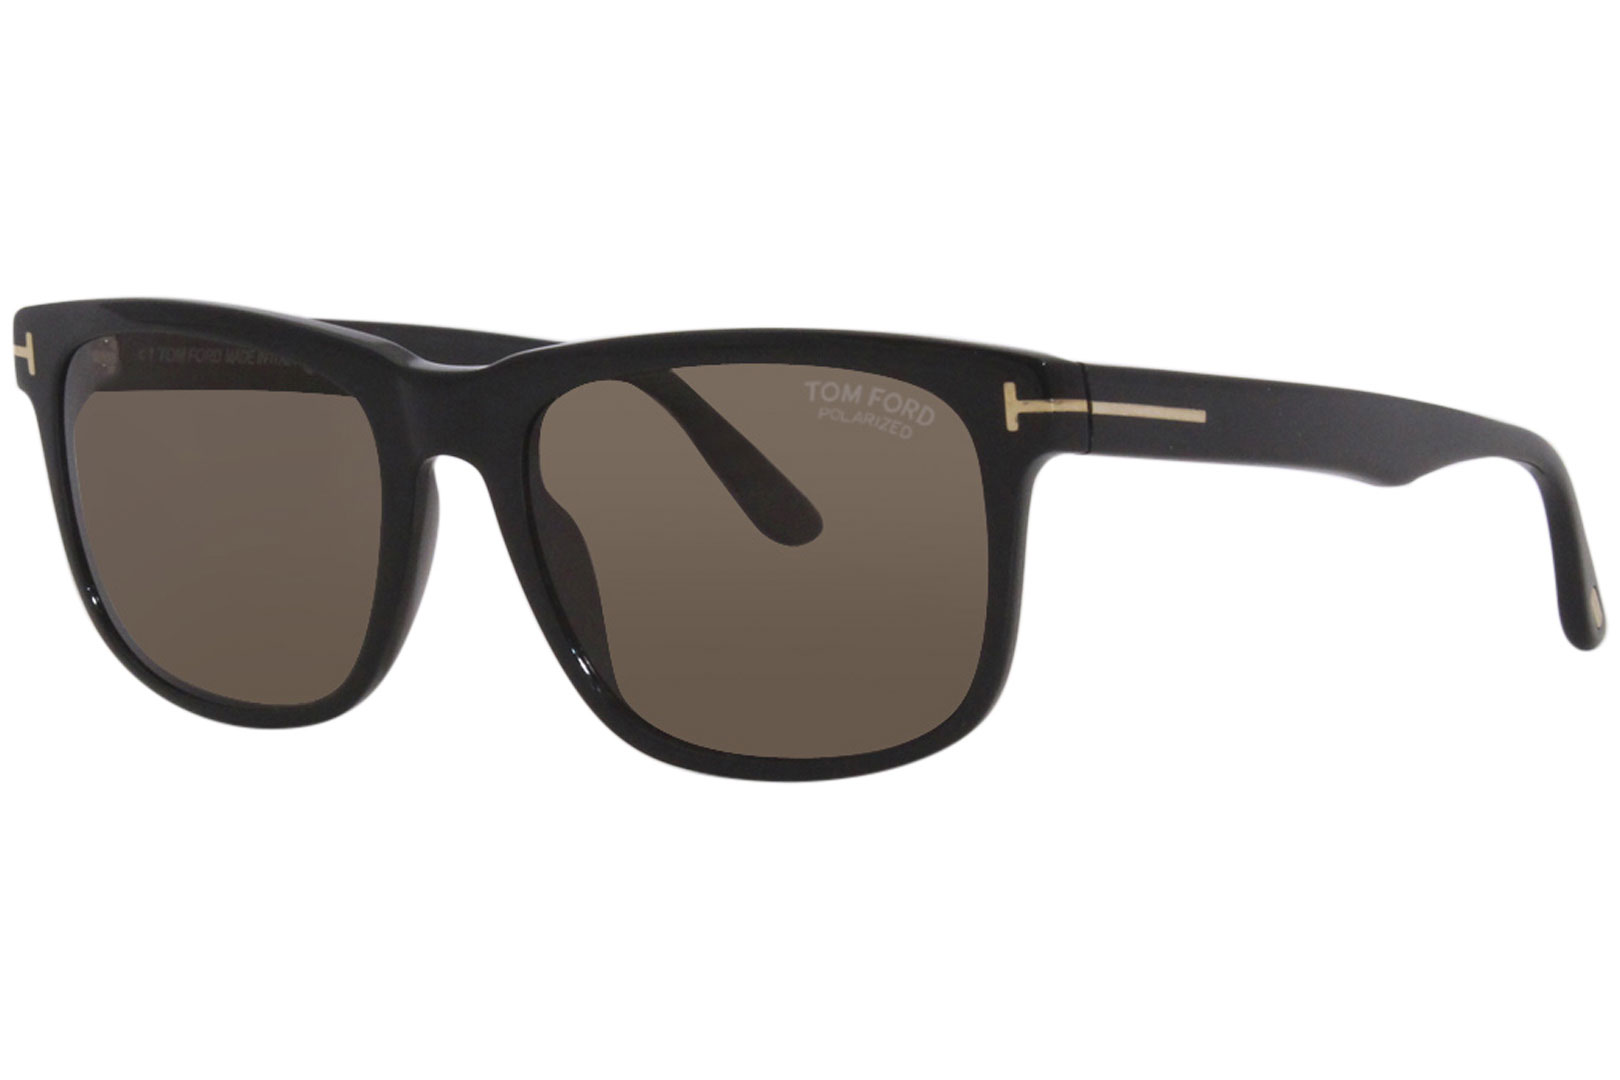 Tom Ford Sunglasses Men's Stephenson TF775 01H Shiny Black/Brown ...